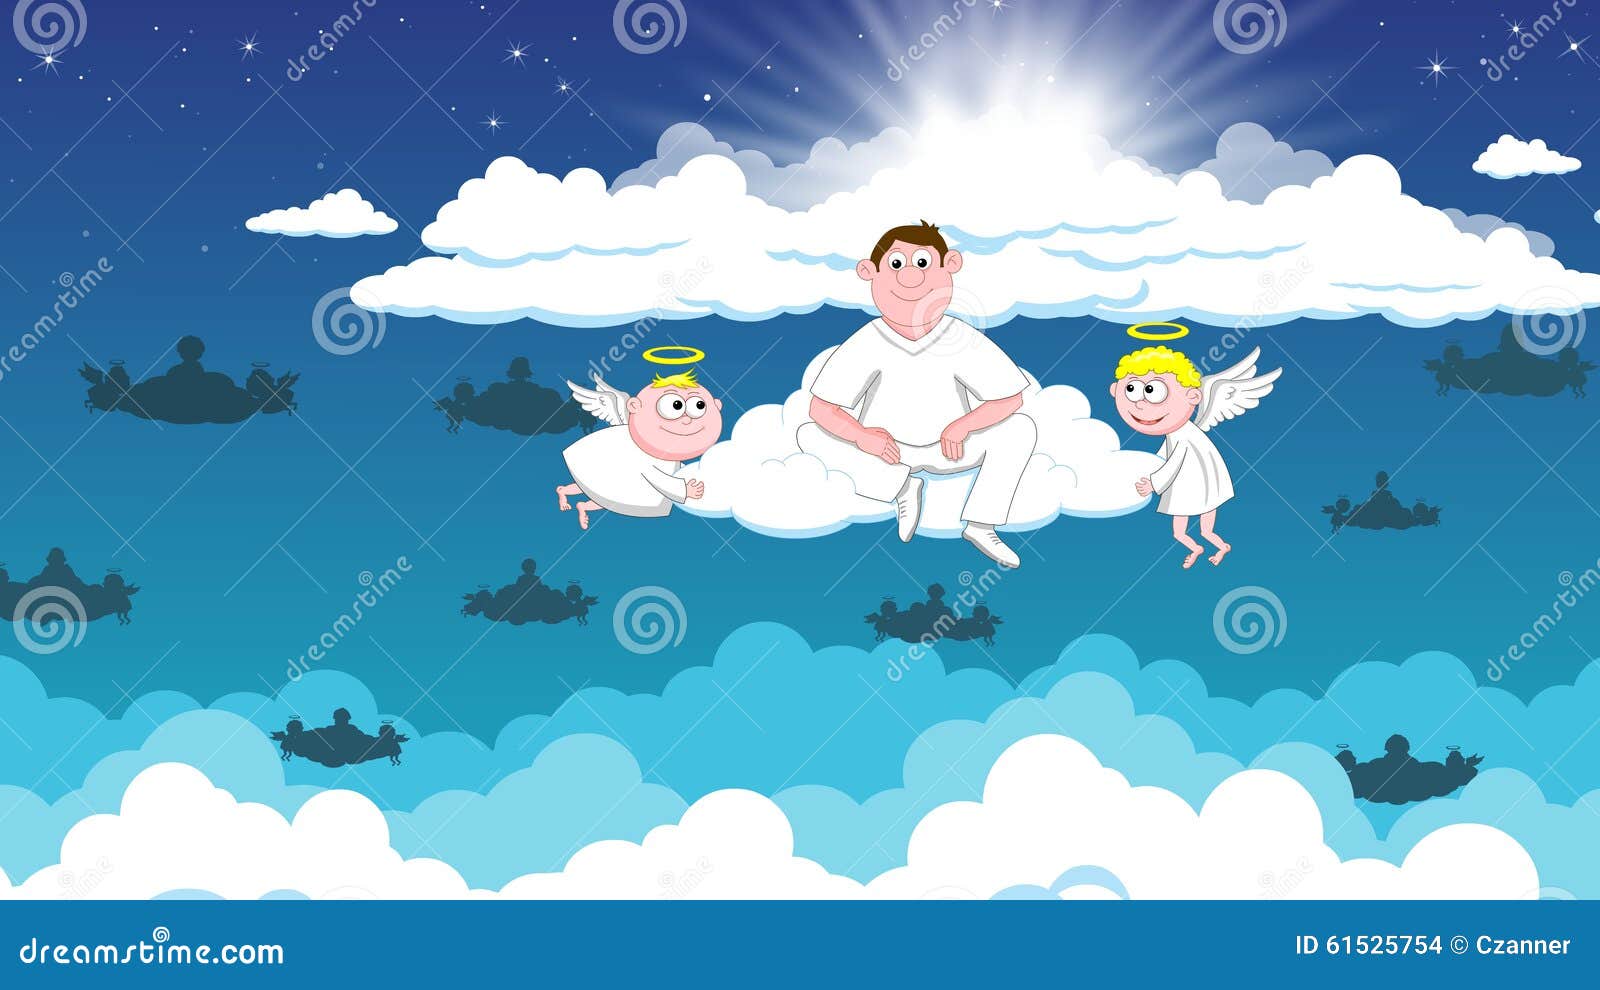 Angels in heaven stock illustration. Illustration of color - 61525754